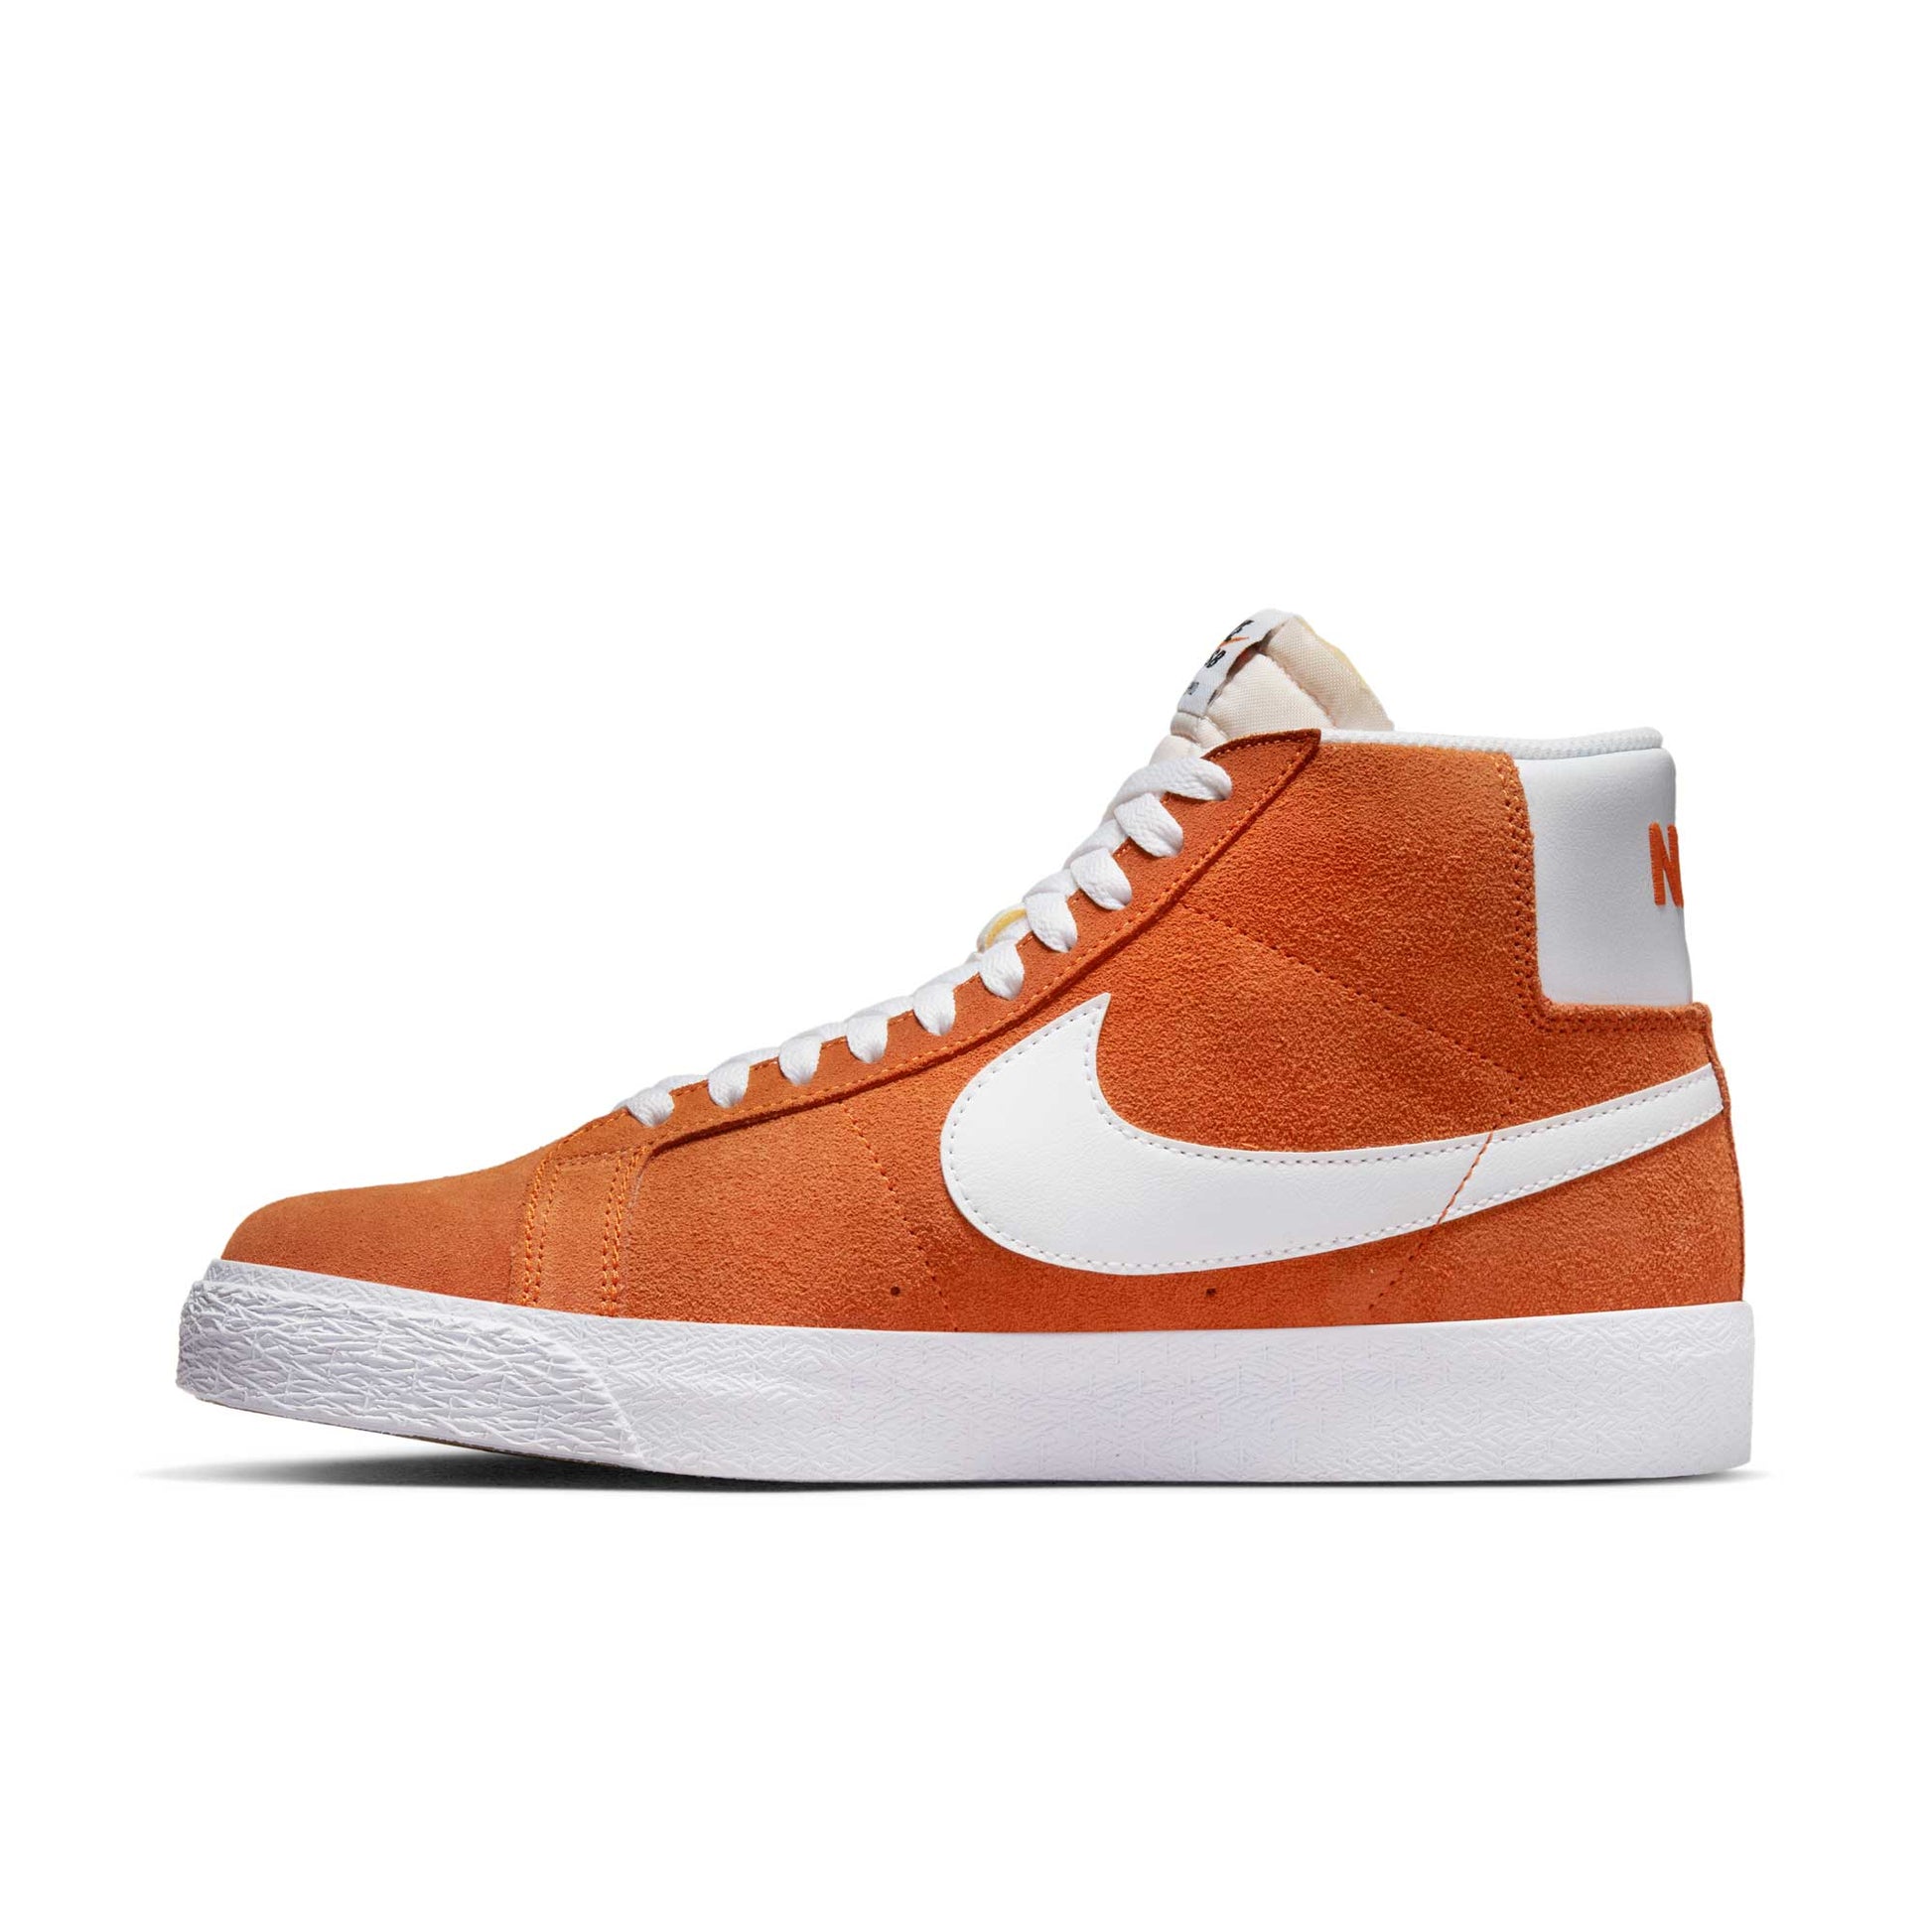 Nike SB Zoom Blazer Mid, safety orange/white-safety orange-white - Tiki Room Skateboards - 8